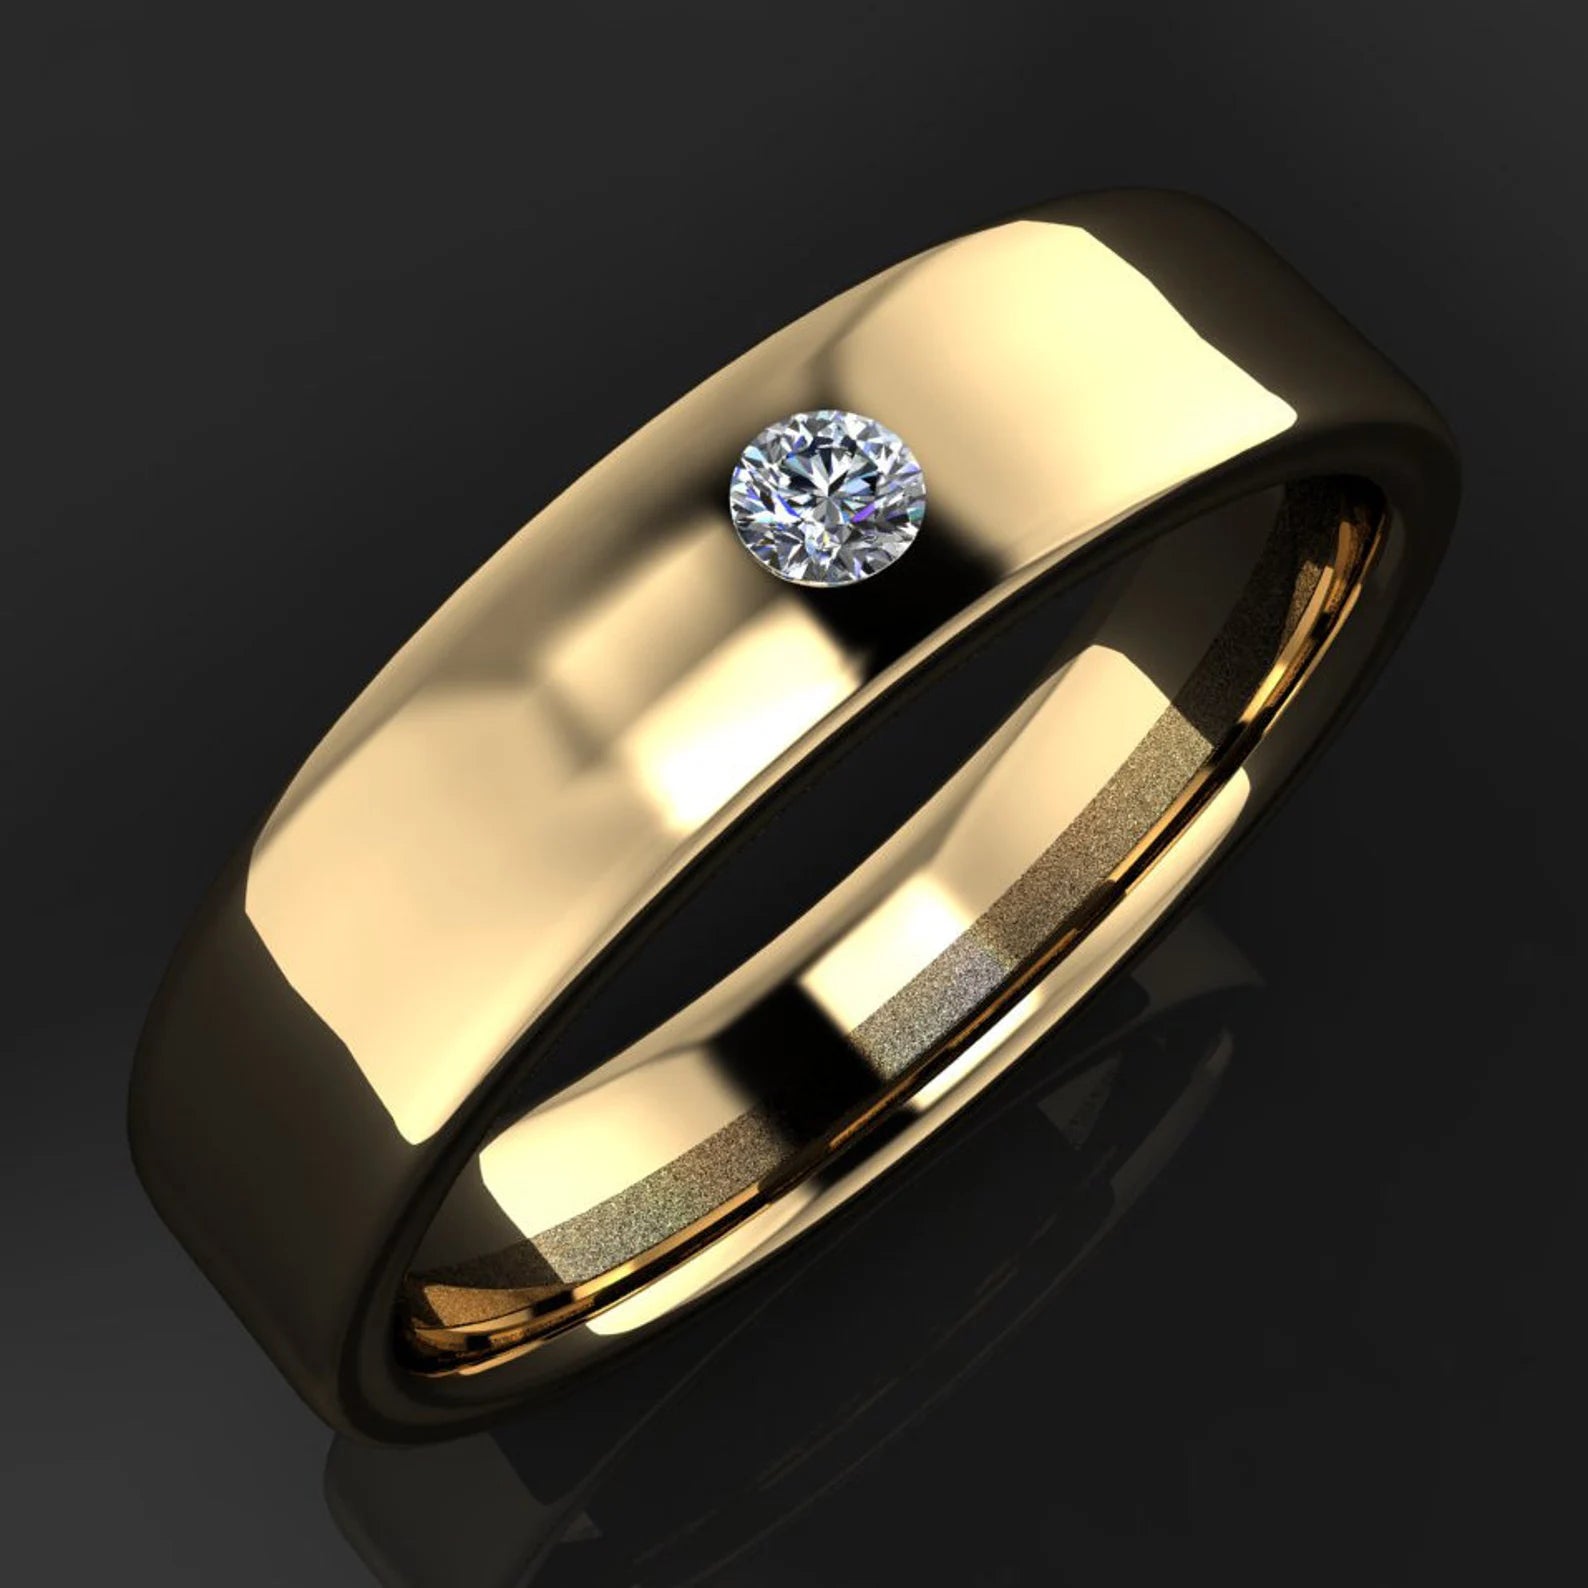 Buy Mens Gold Jewelry Online | Latest Men's Gold Jewelry Designs | Starkle